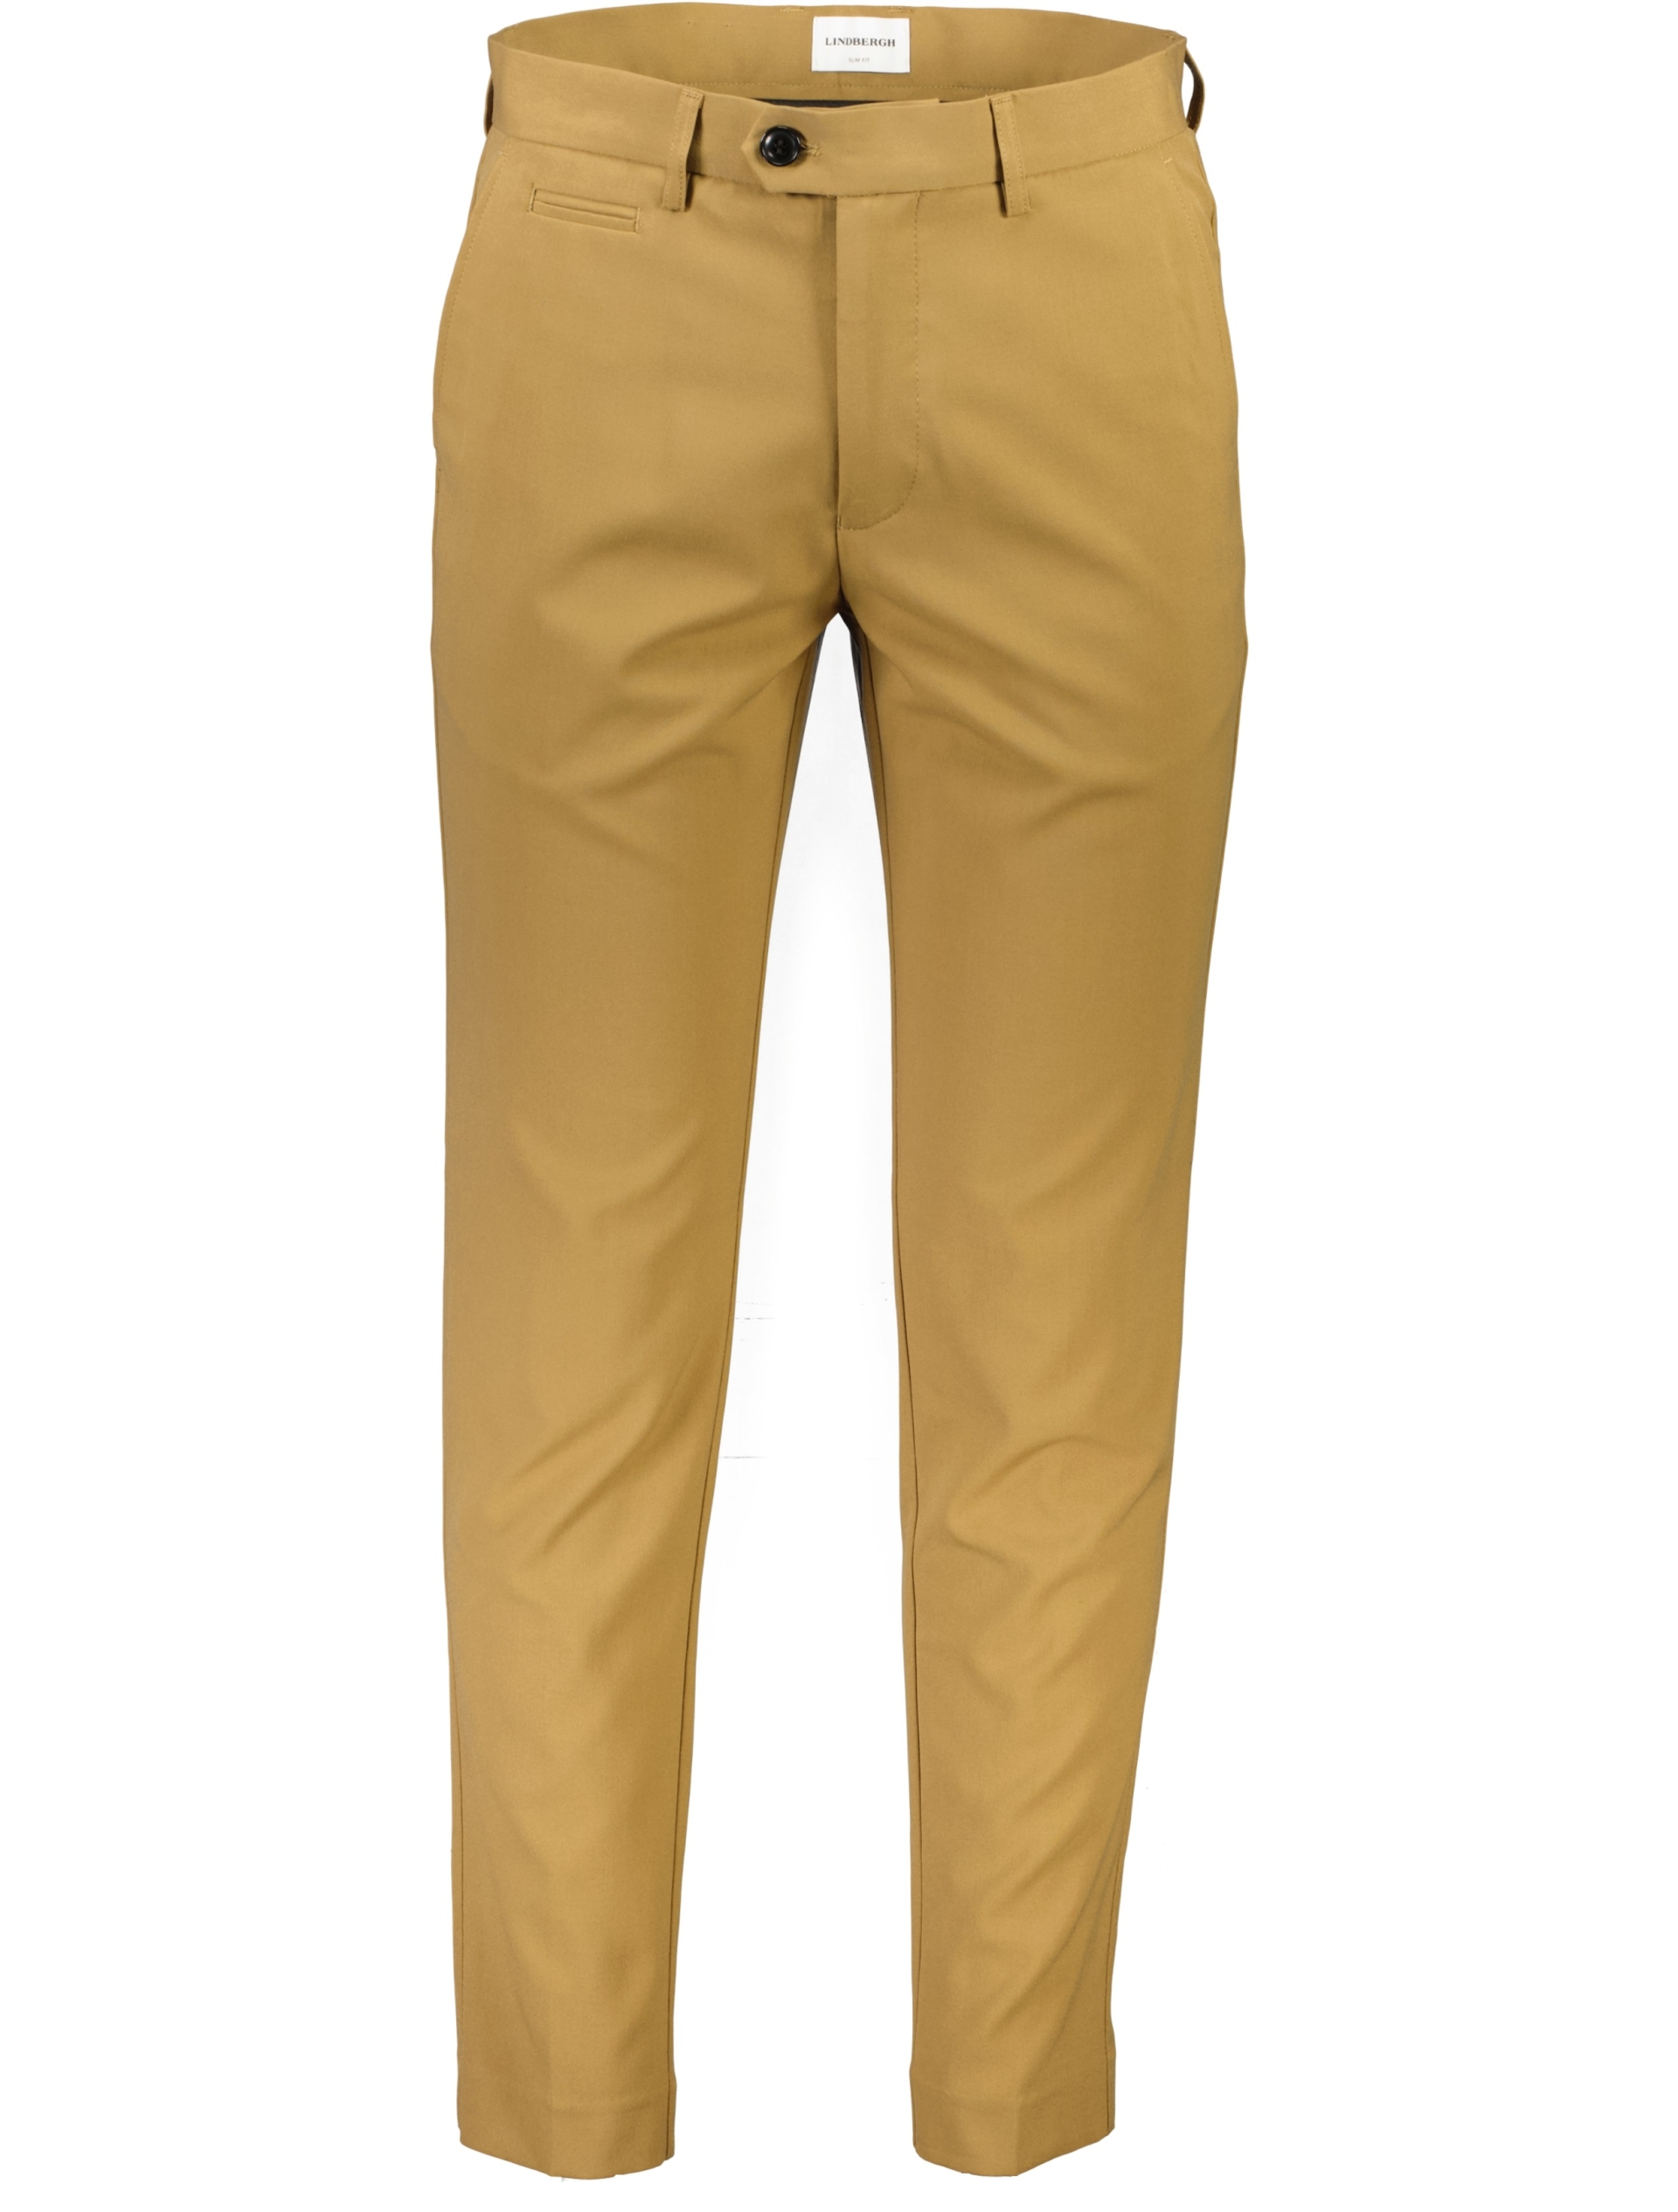 Lindbergh Performance pants brown / mid camel